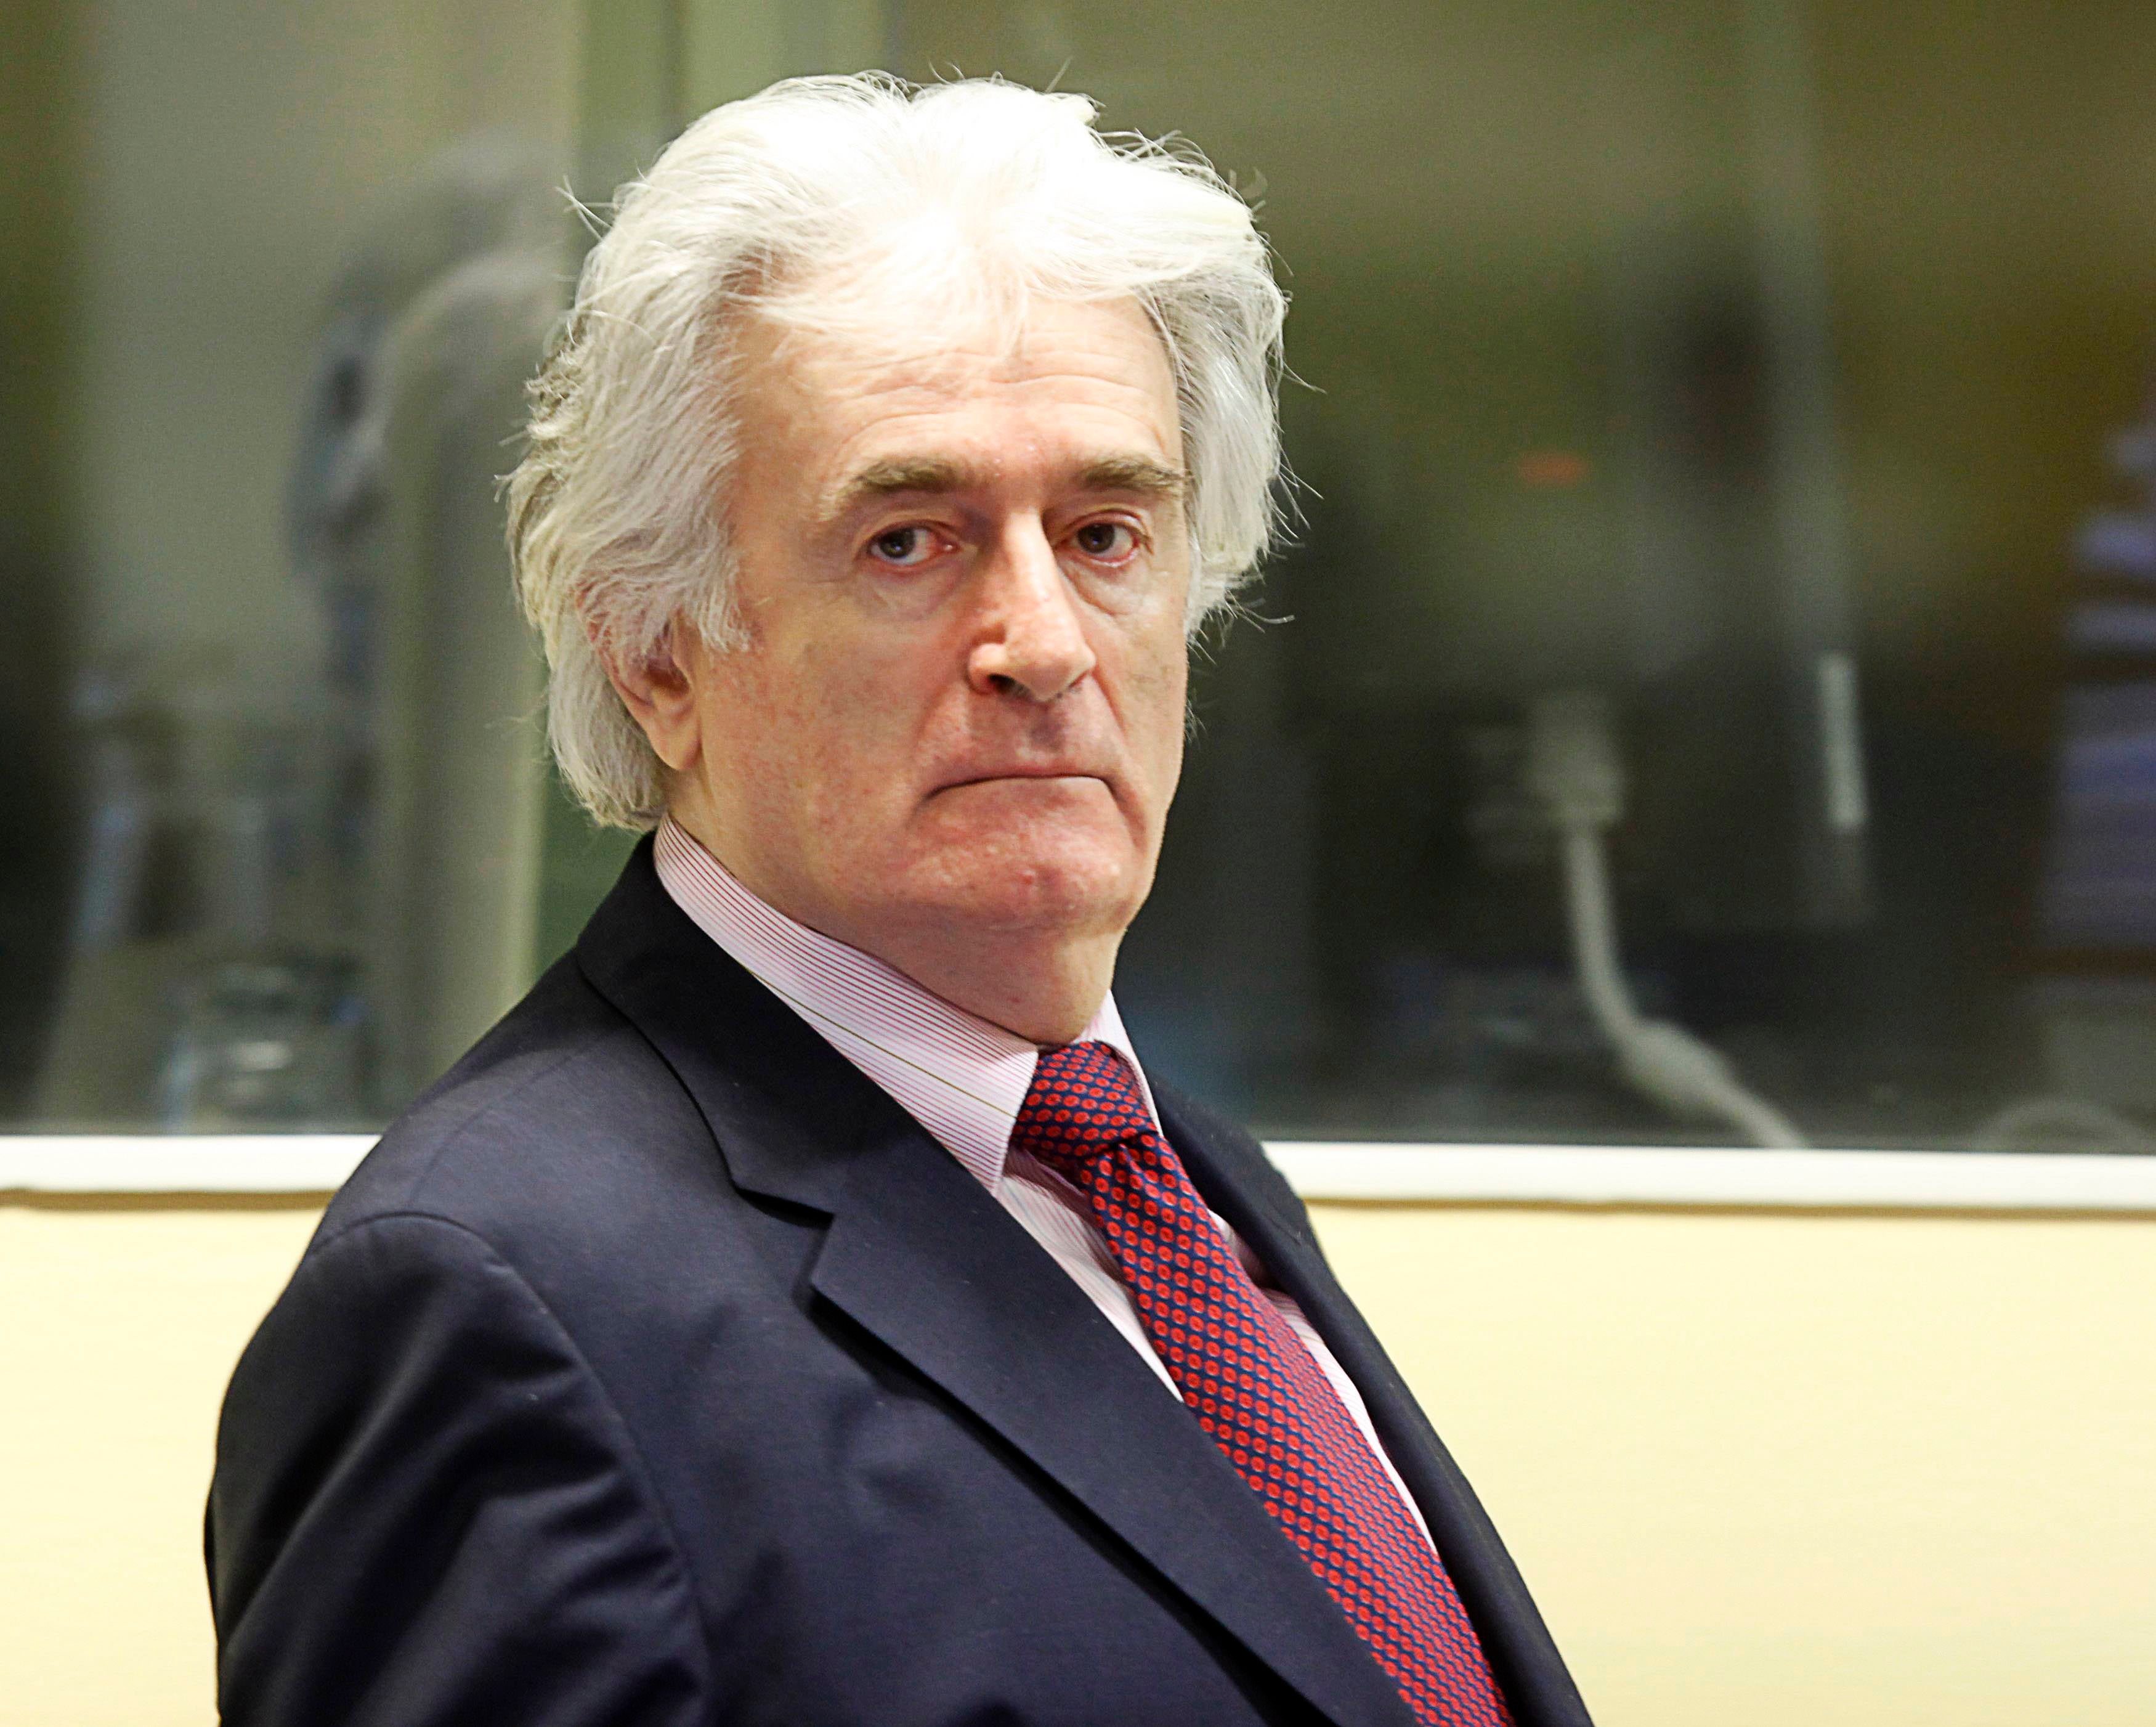 Radovan Karadzic in The Hague in 2009